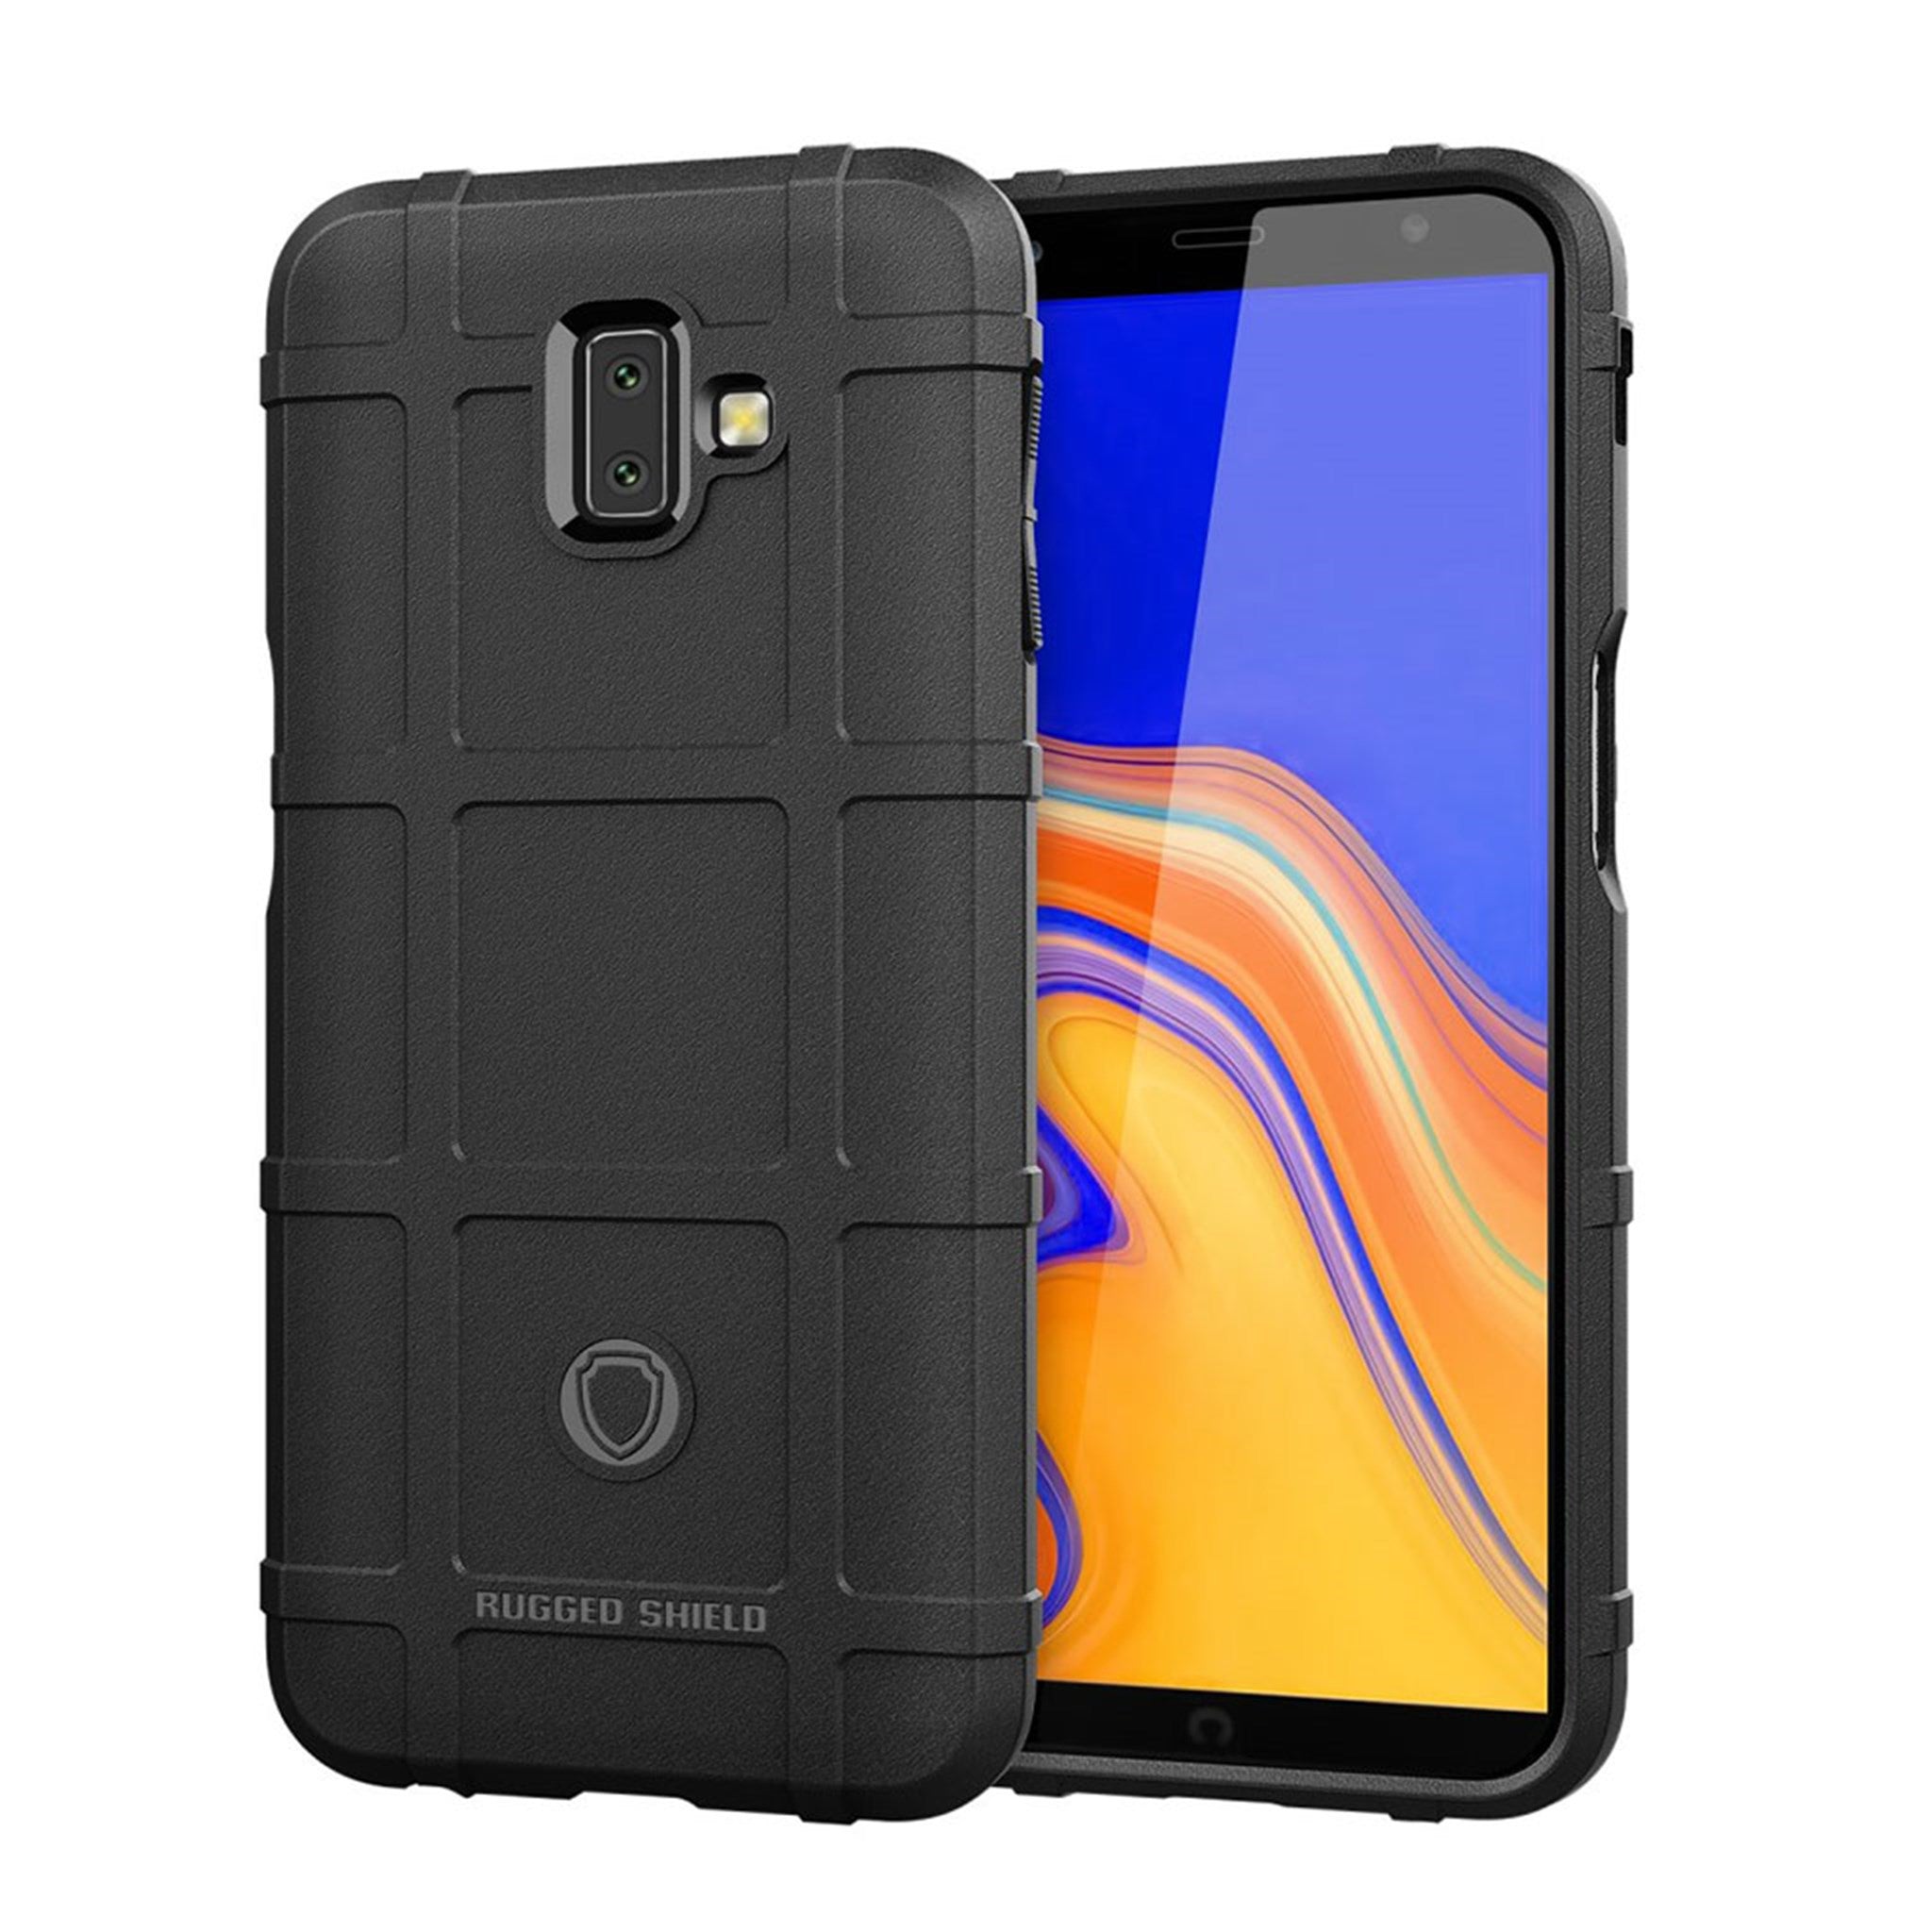 Samsung Galaxy J6 Plus (2018) anti-shock grid texture soft case - Black